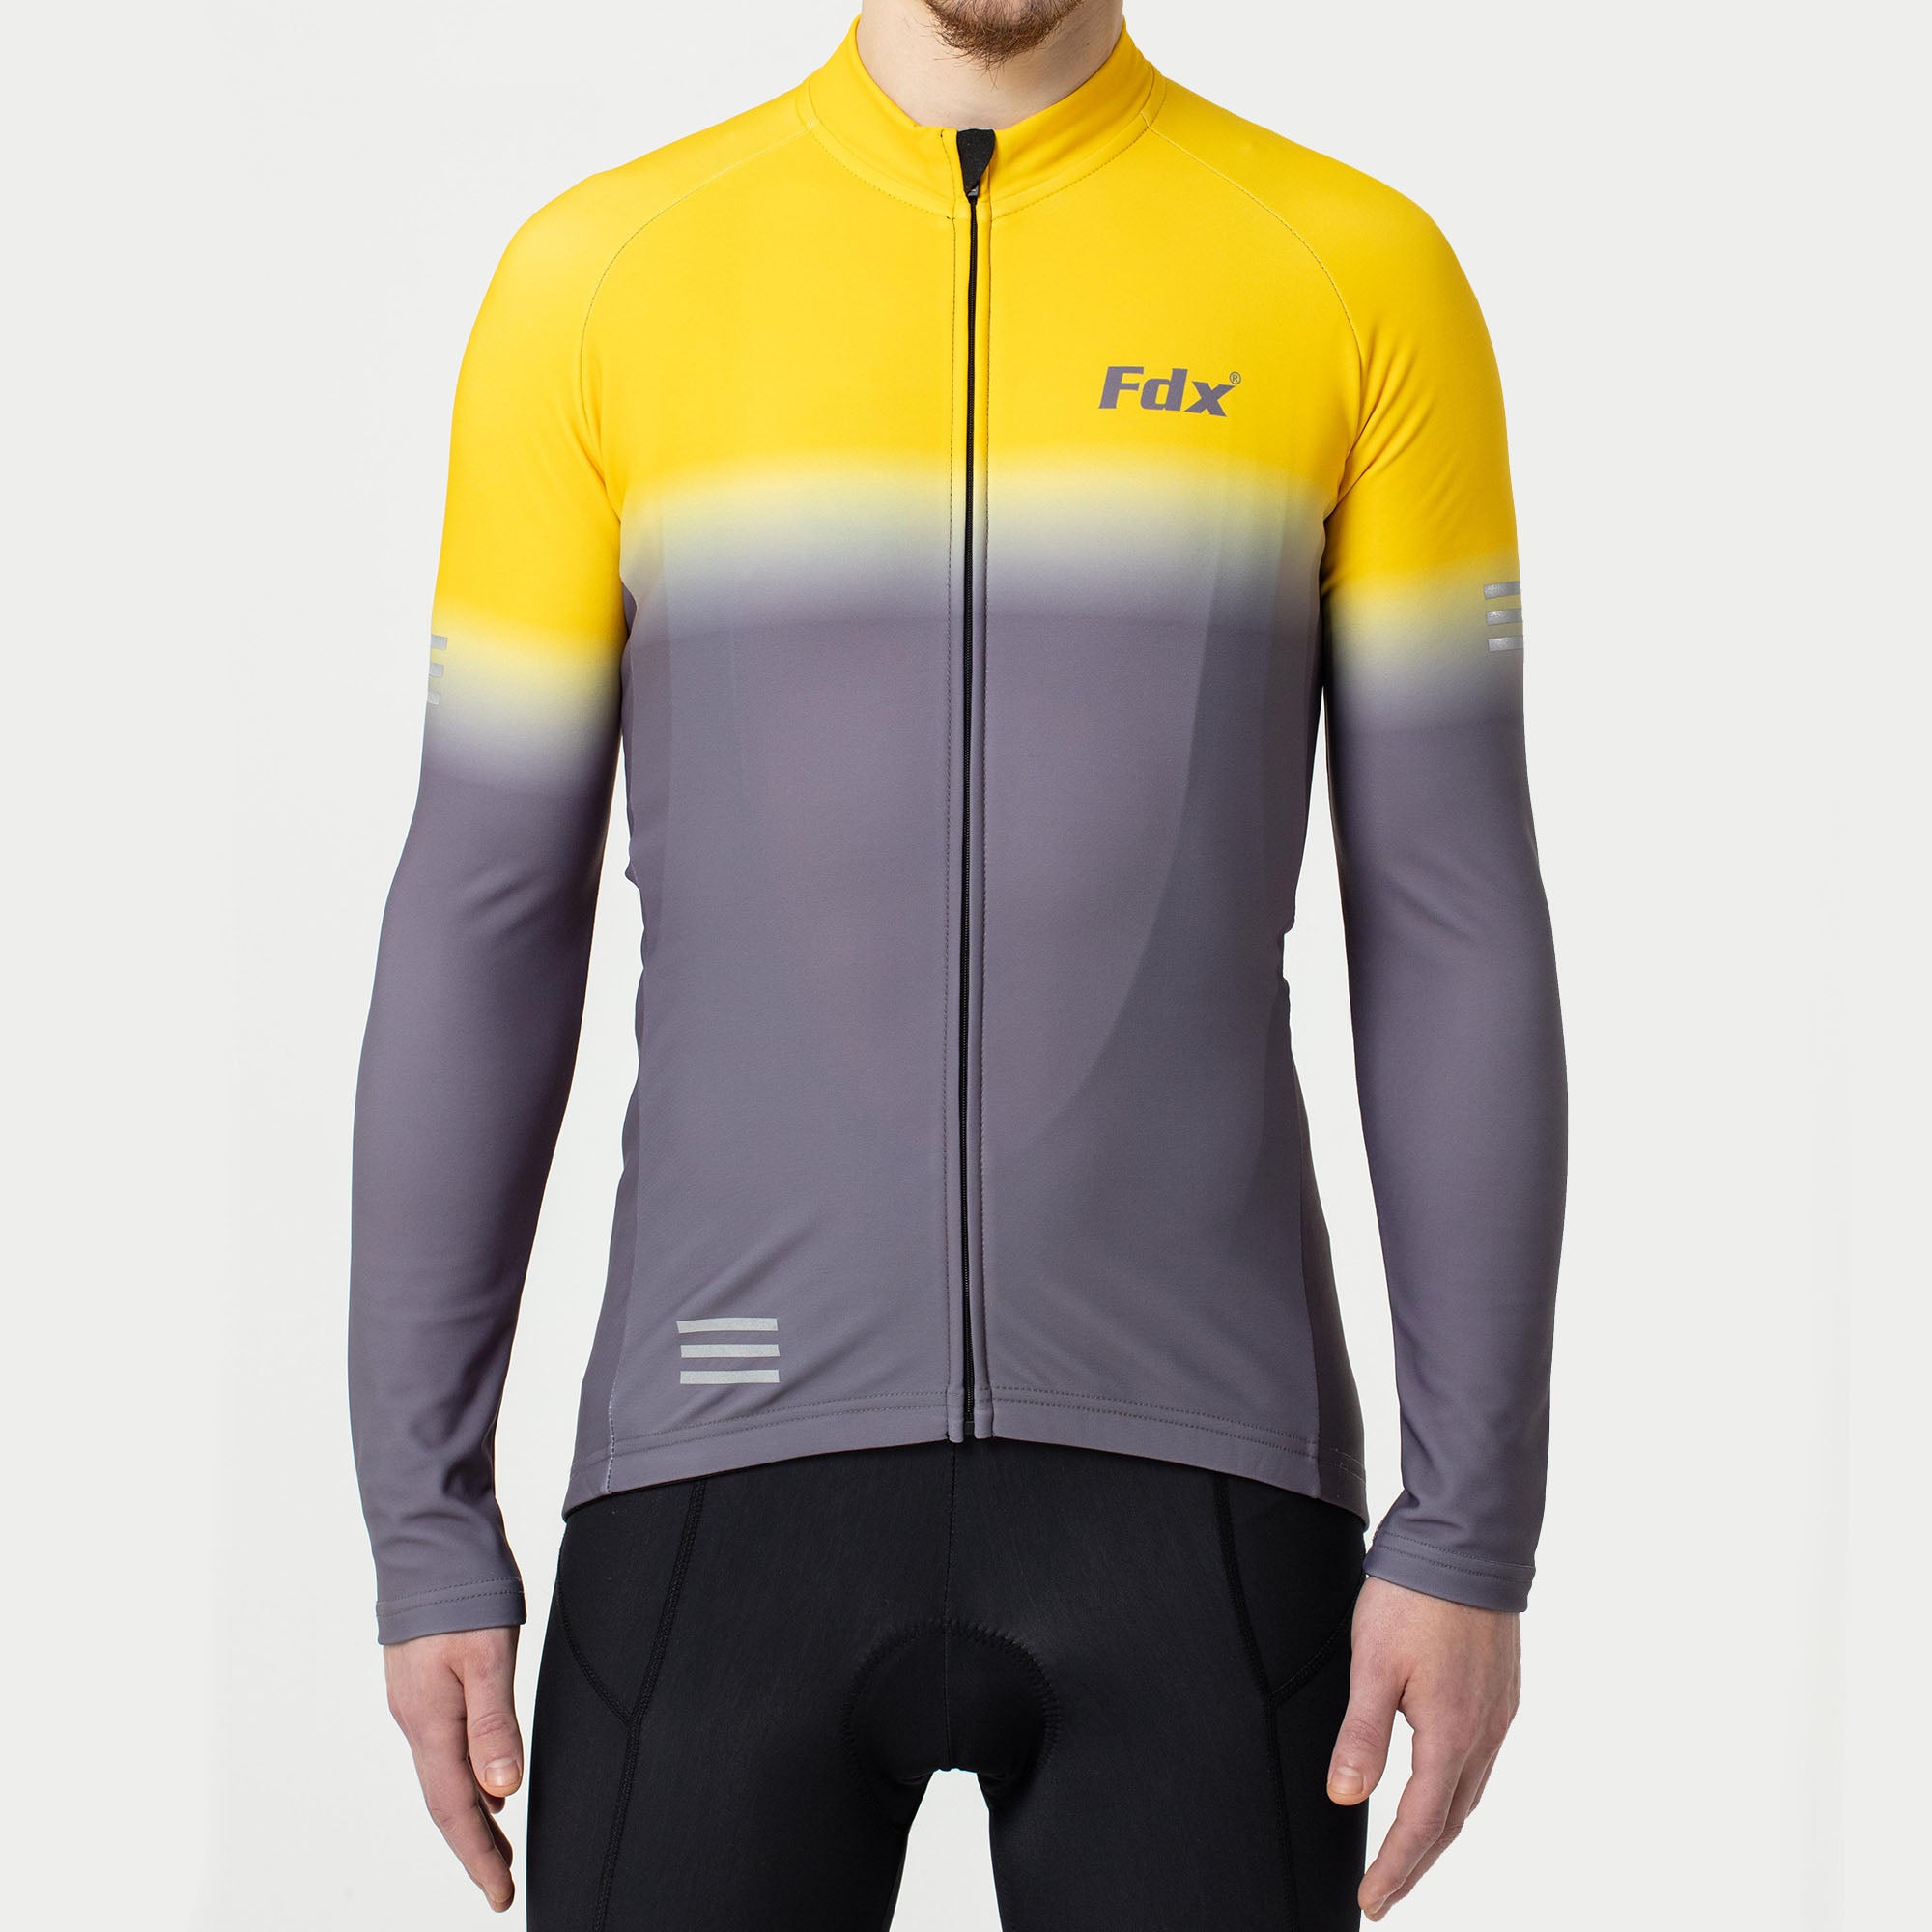 Fdx Mens Yellow Long Sleeve Cycling Jersey for Winter Roubaix Thermal Fleece Road Bike Wear Top Full Zipper, Pockets & Hi-viz Reflectors - Duo